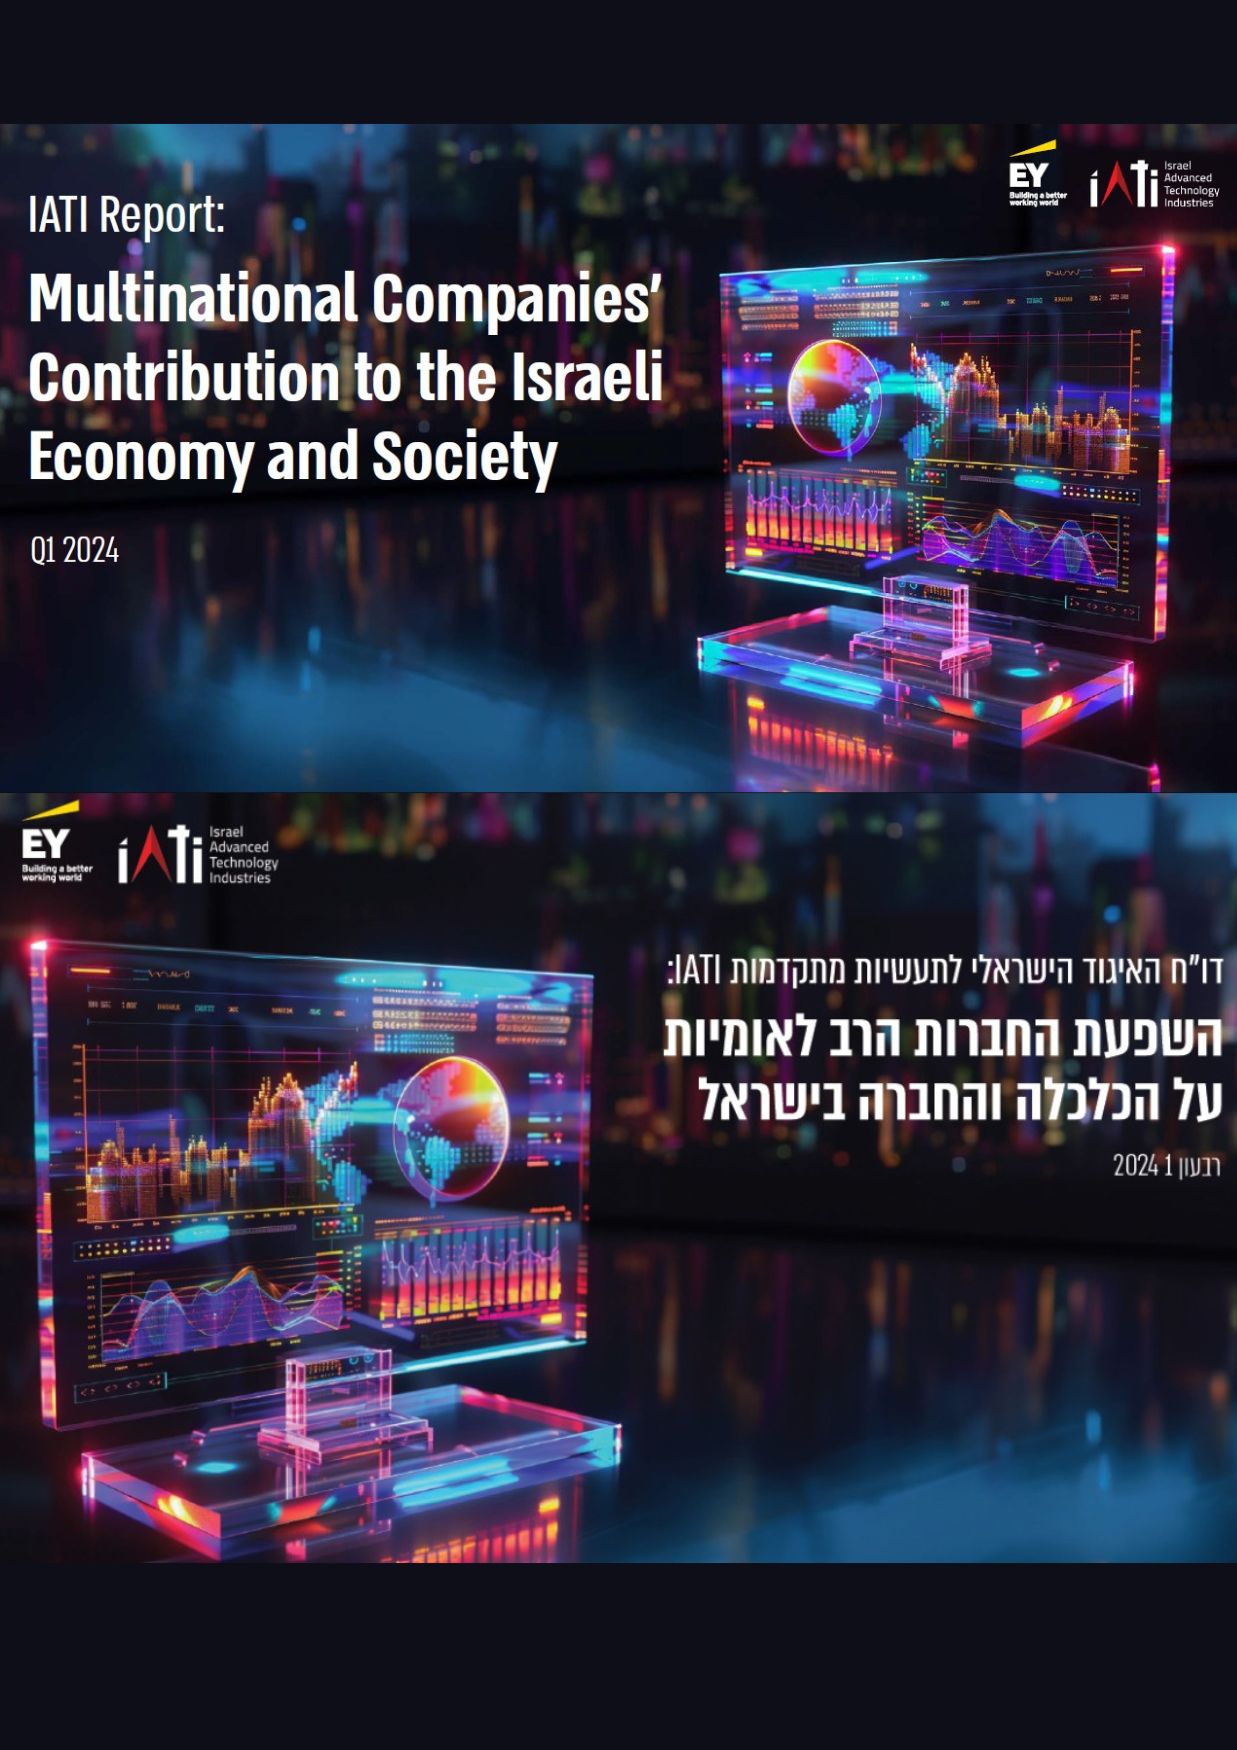 IATI Report: Multinational Companies Contribution to the Israeli Economy and Society